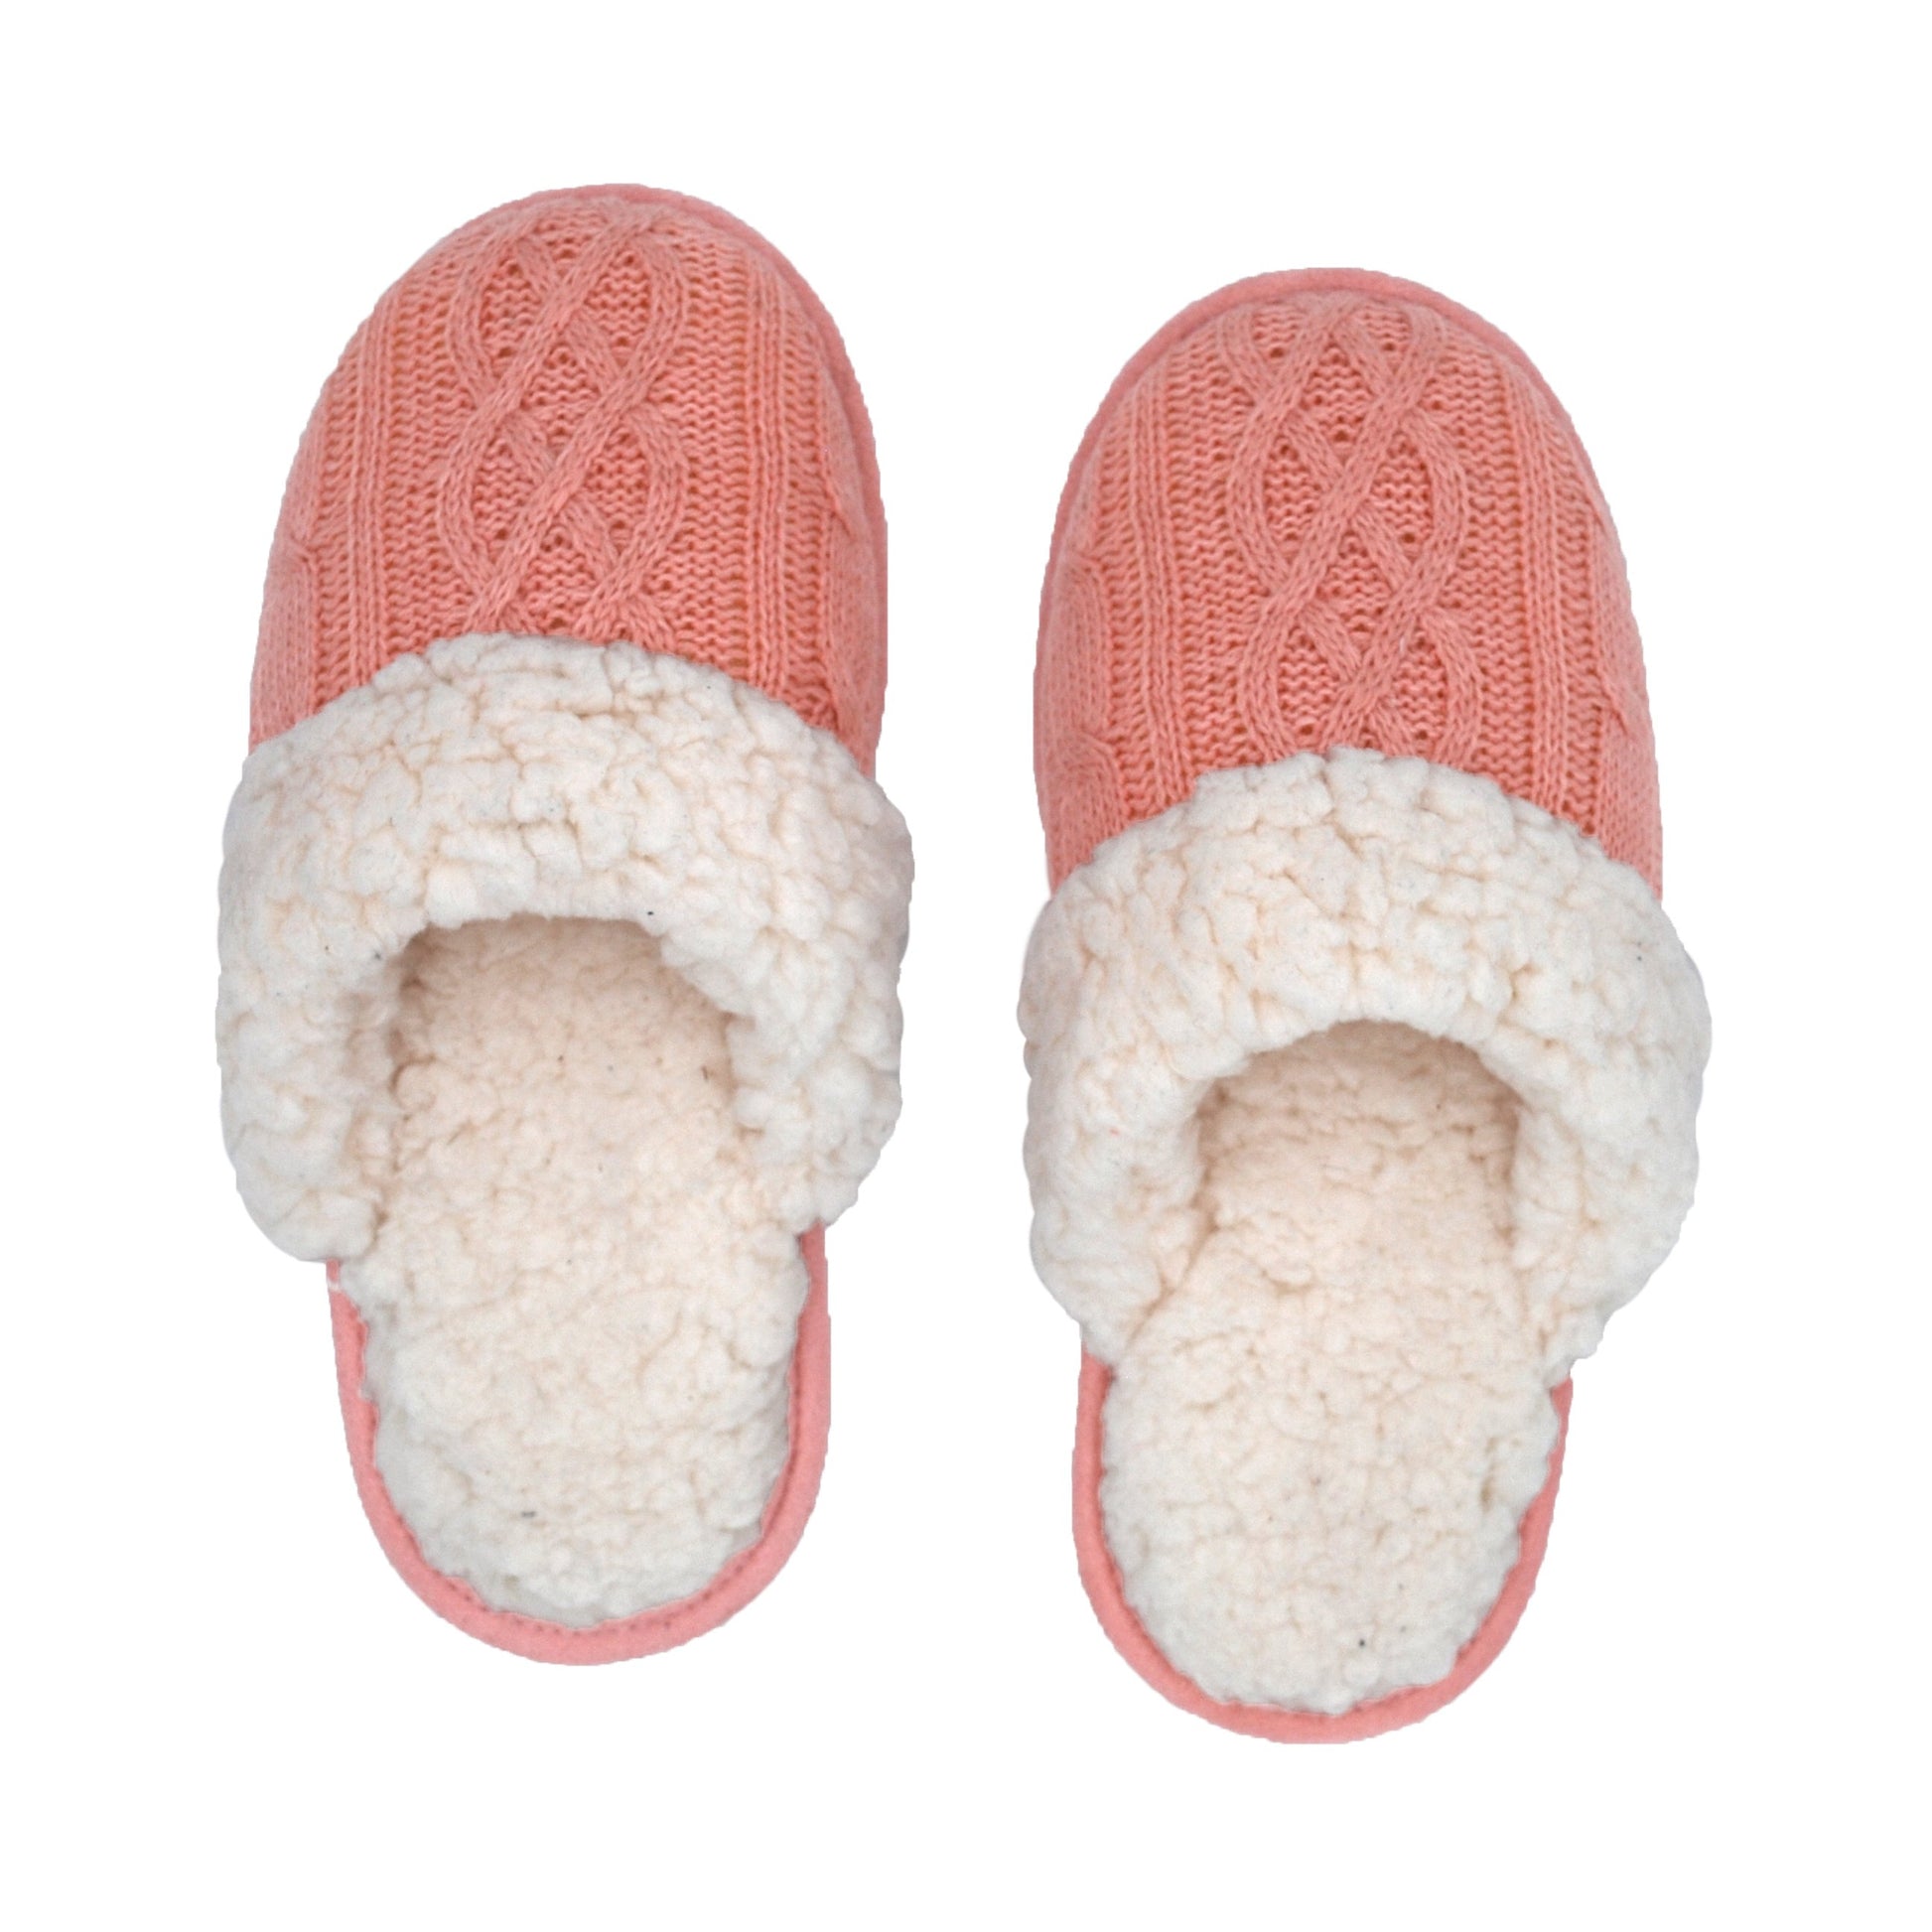 Shoes  Womens Fuzzy Memory Foam Slippers Cozy Plush Furry Home